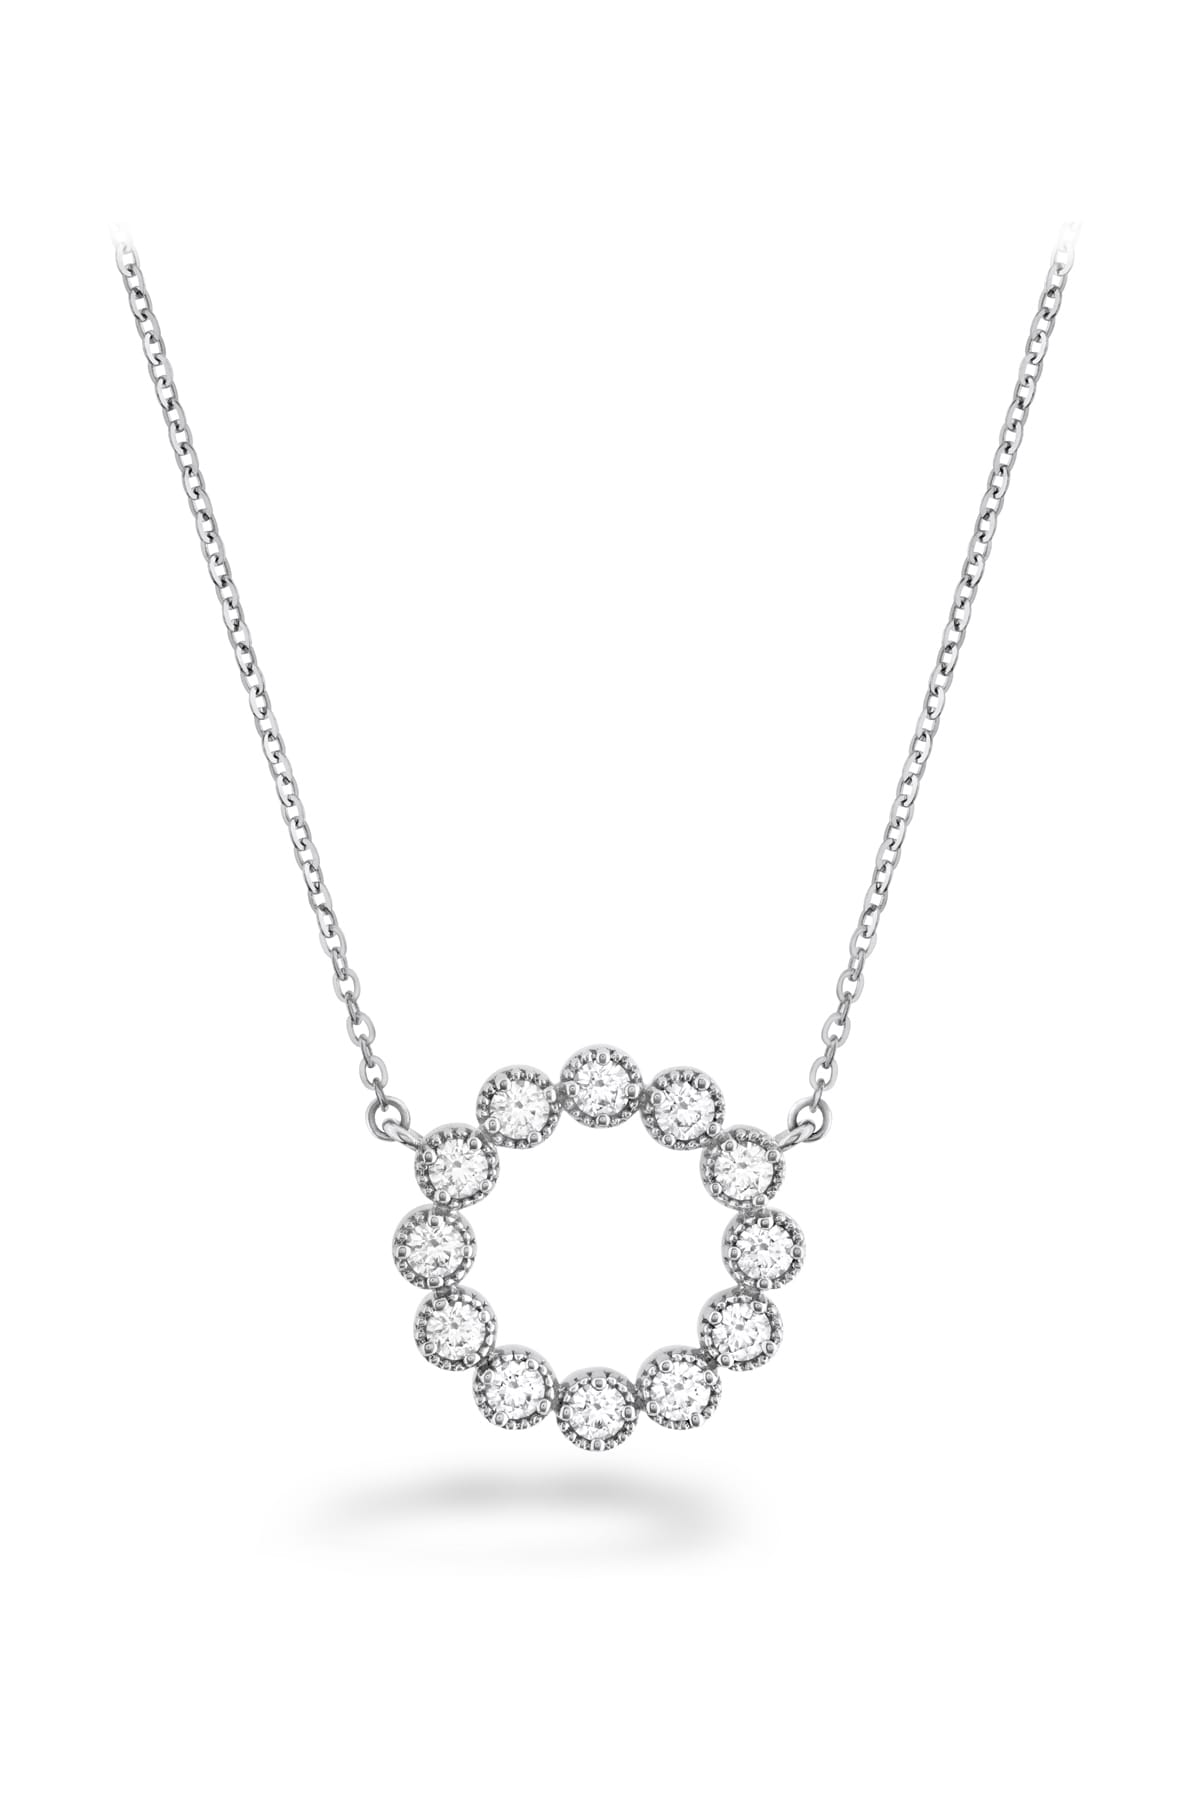 Liliana Milgrain Diamond Circle Pendant From Hearts On Fire available at LeGassick Diamonds and Jewellery Gold Coast, Australia.